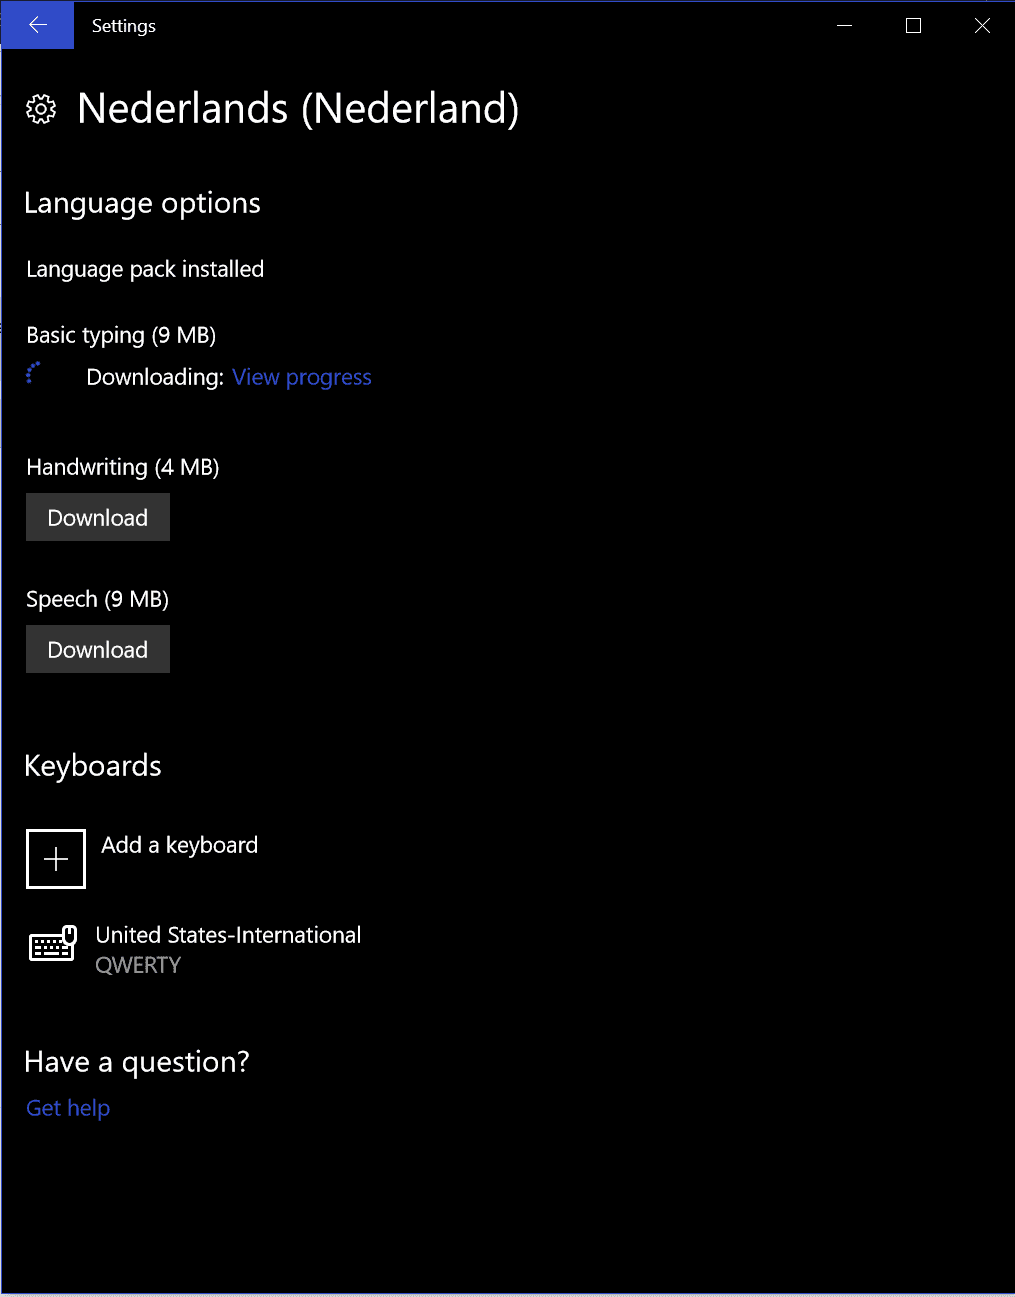 Problems installing language pack on Windows 10 86e93cec-c504-487f-aa4e-af5798626cfd?upload=true.png